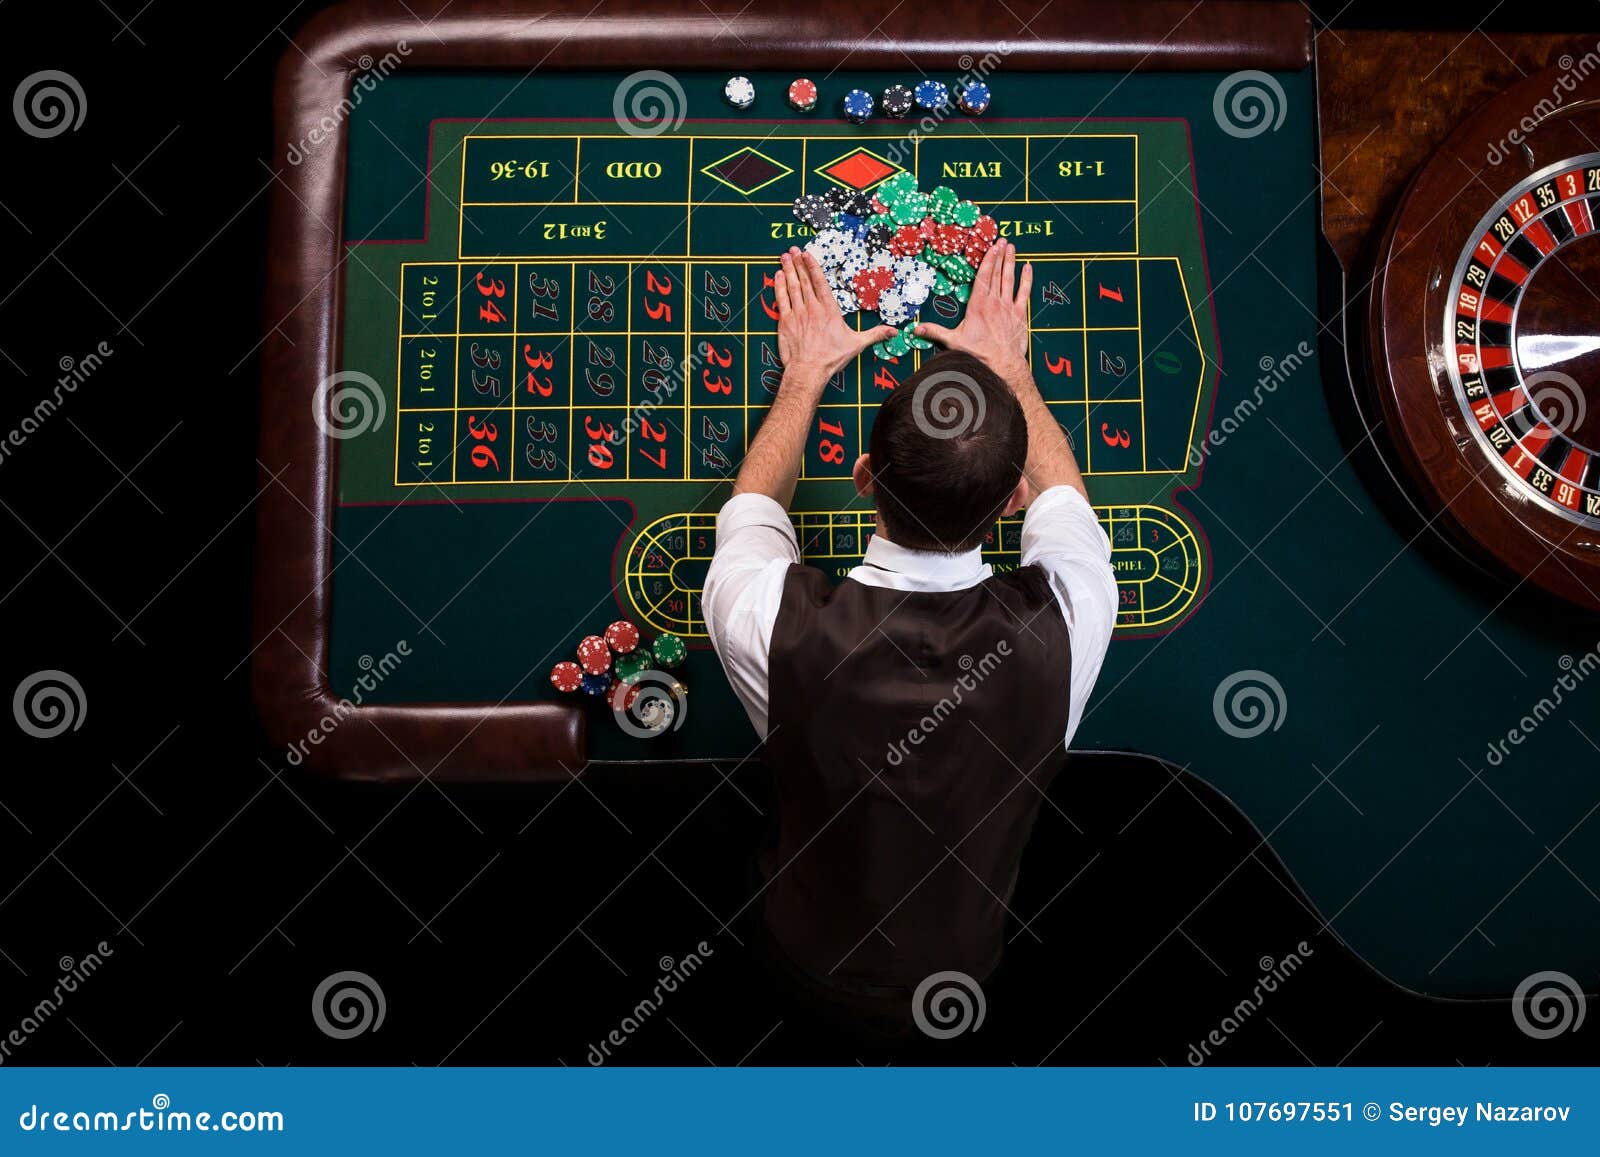 Georgia roulette casino